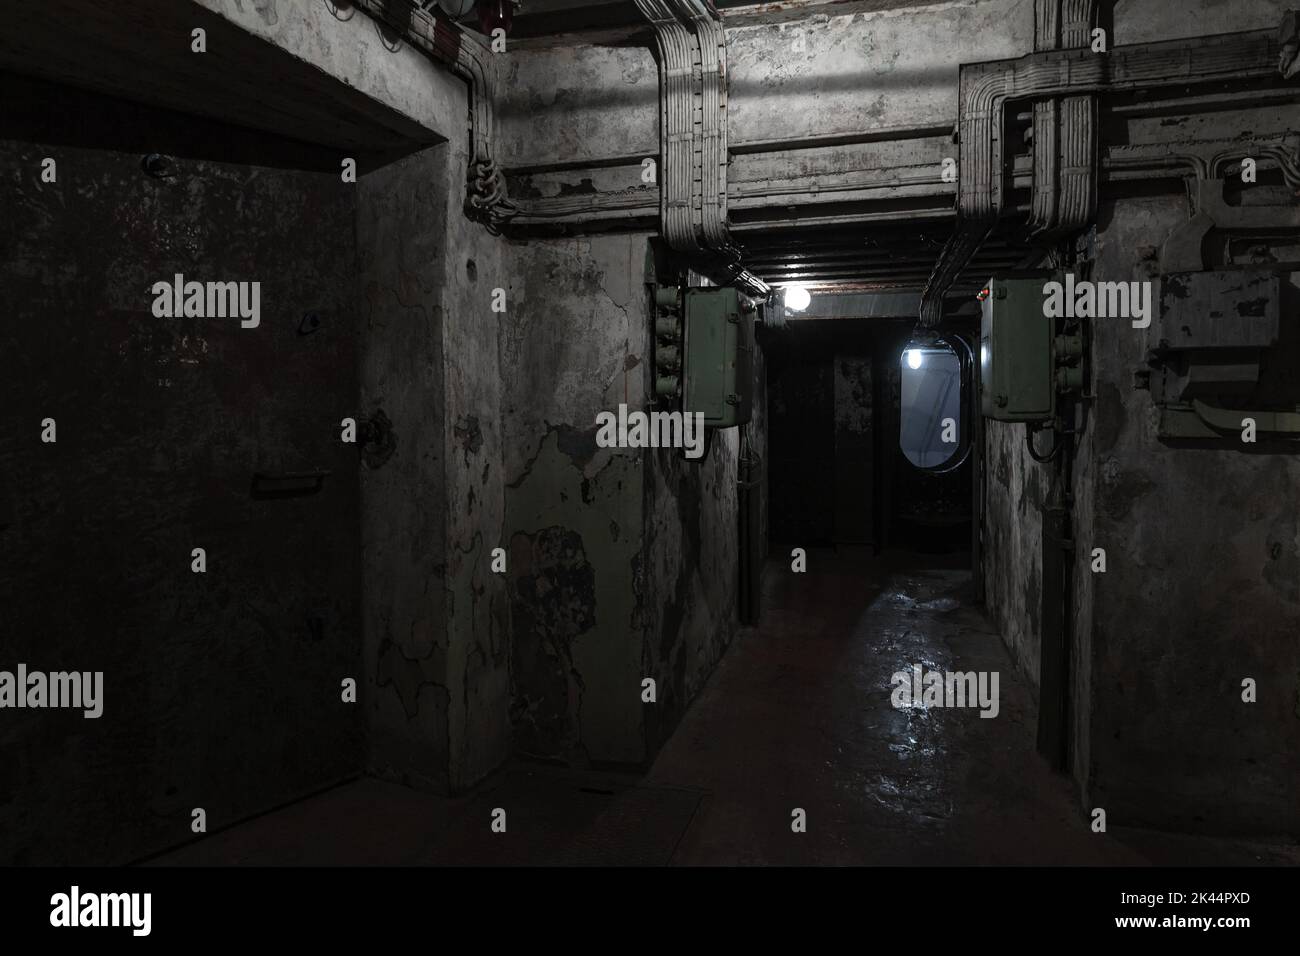 Abstract dark military bunker interior, grungy underground rooms with poor illumination Stock Photo